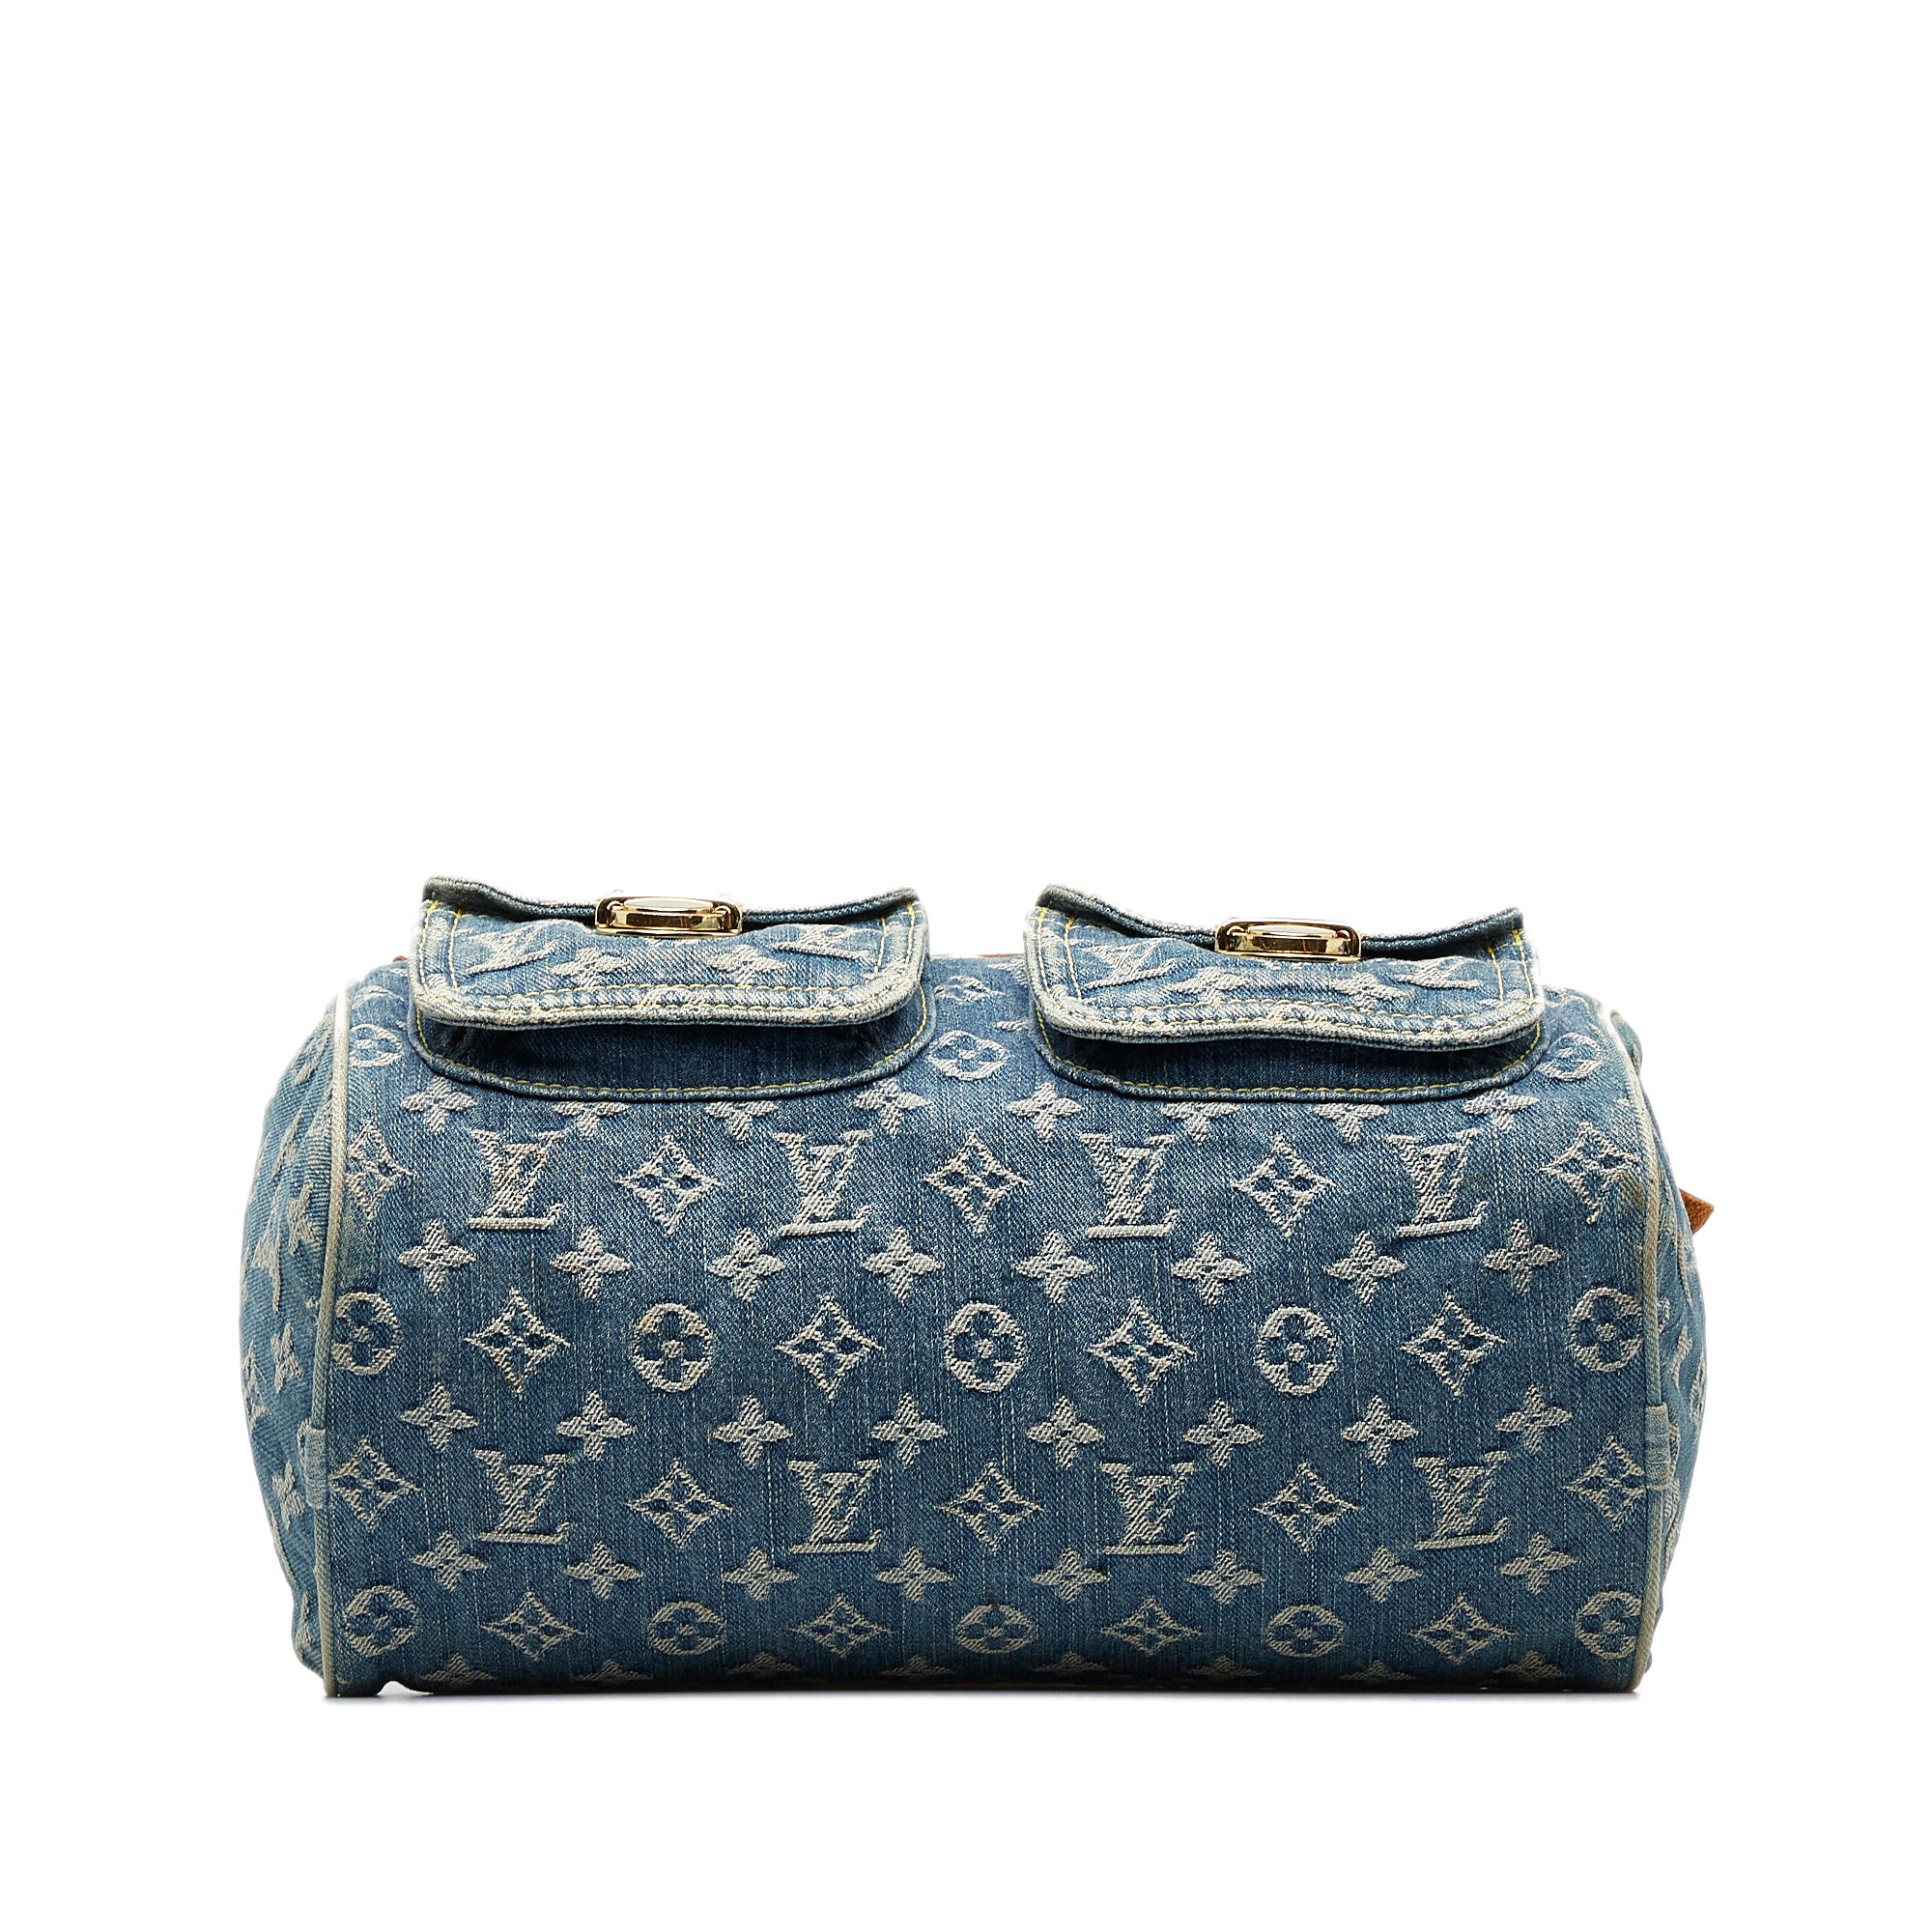 Louis Vuitton 2005 Pre-owned Speedy 30 Handbag